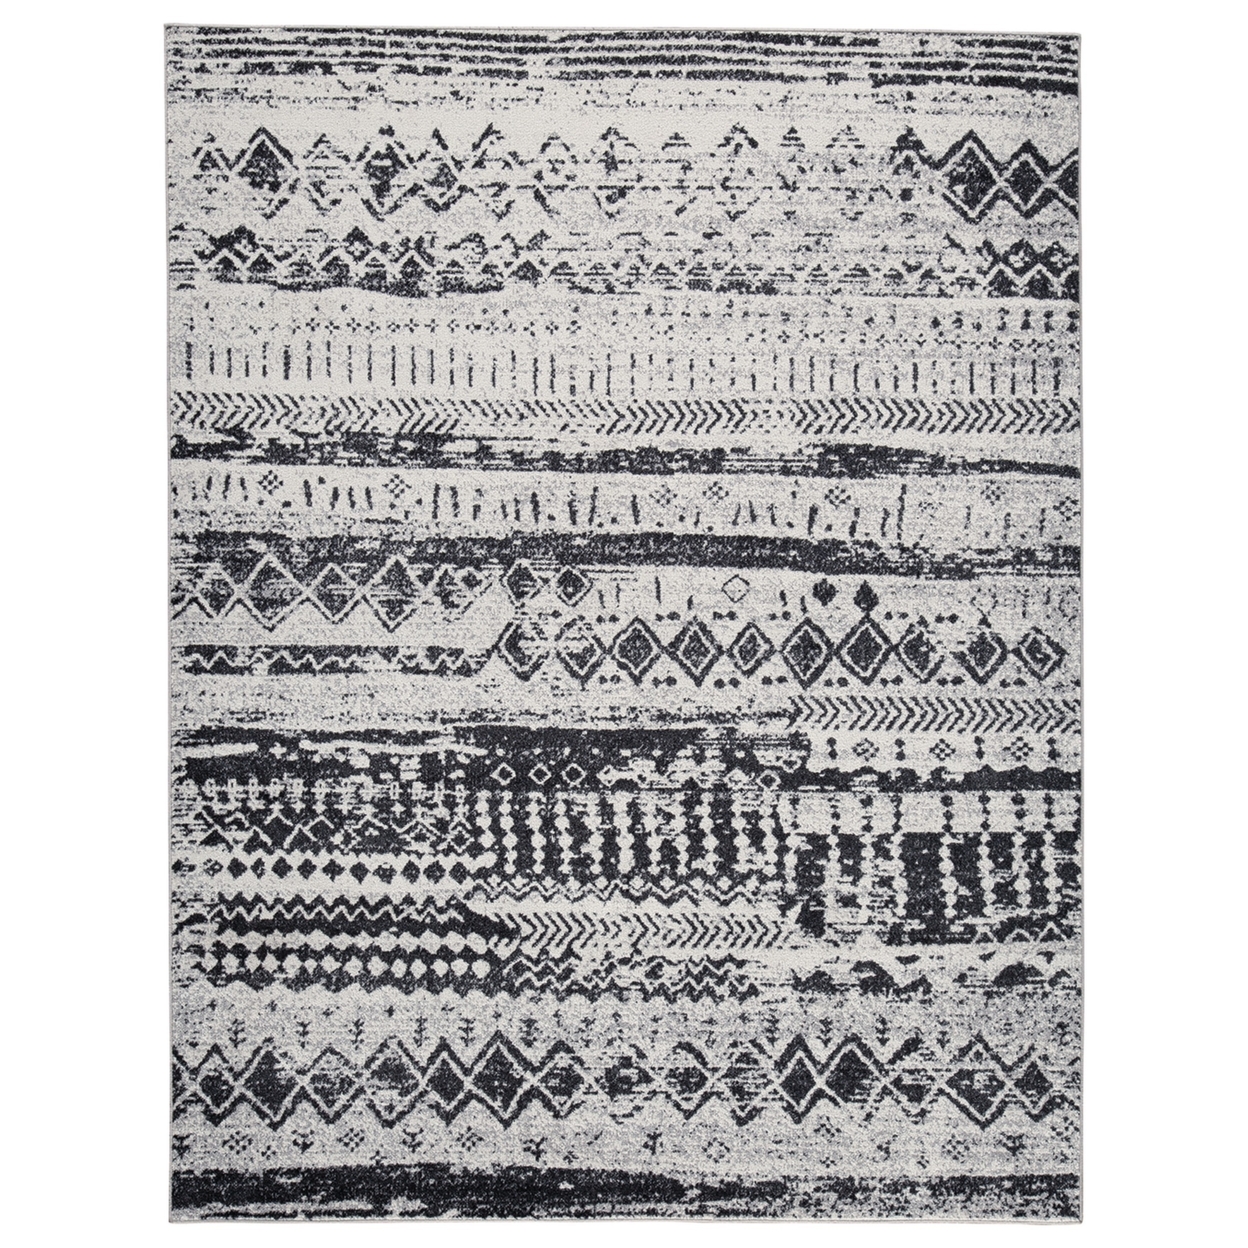 Kiza 5 X 7 Area Rug, Woven Organic Design, Black And White Polyester Fabric- Saltoro Sherpi